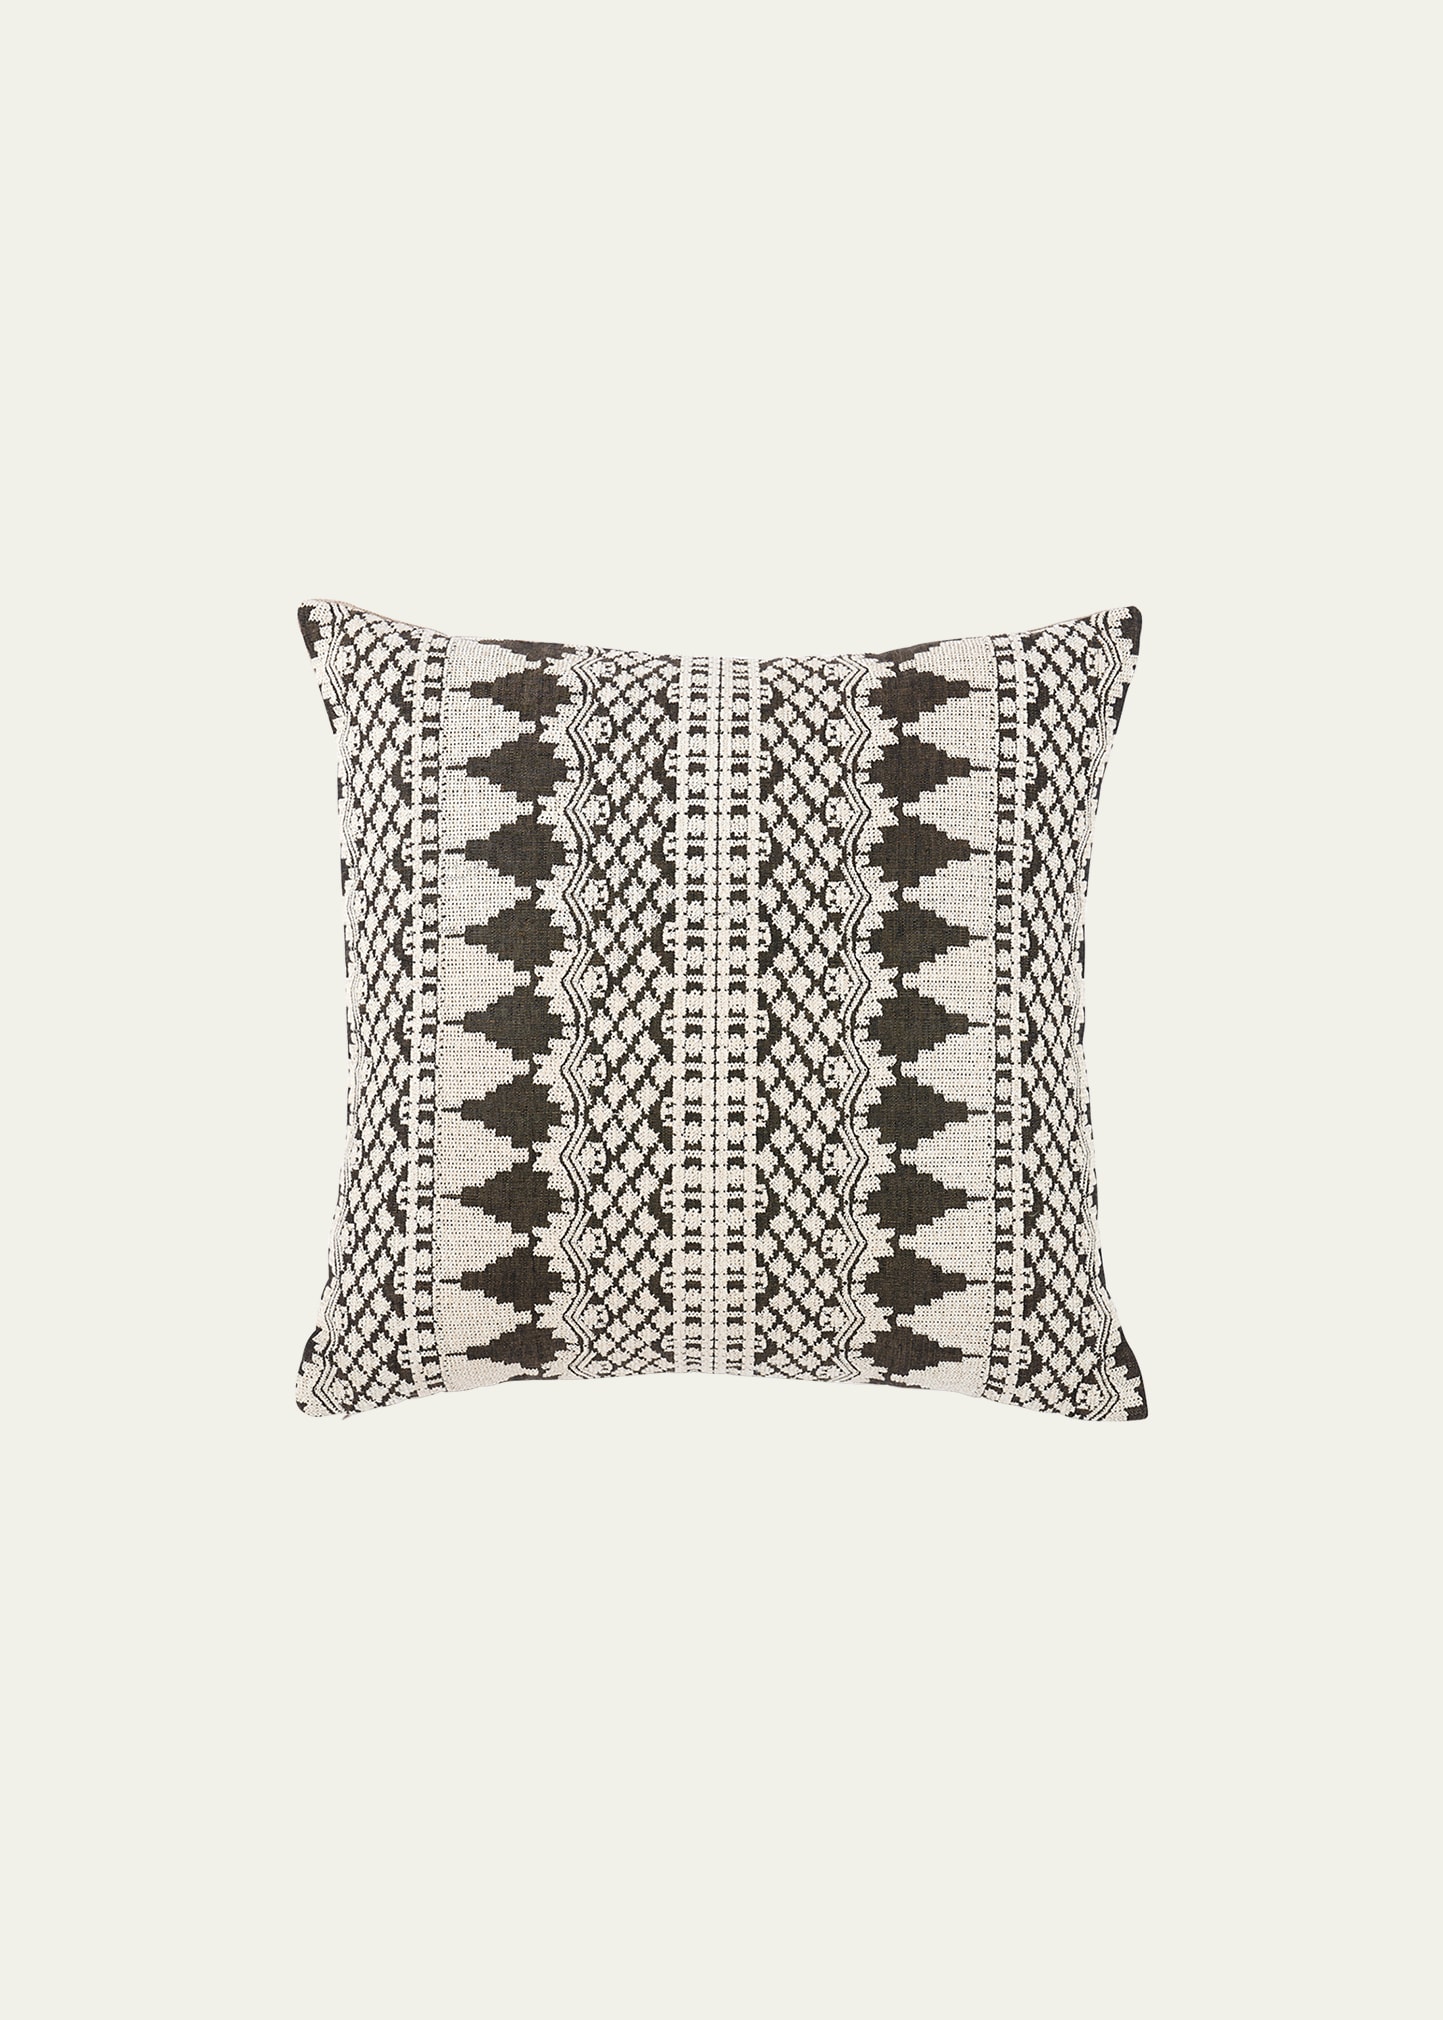 Schumacher Wentworth Embroidered Pillow, 22"sq. In Carbon